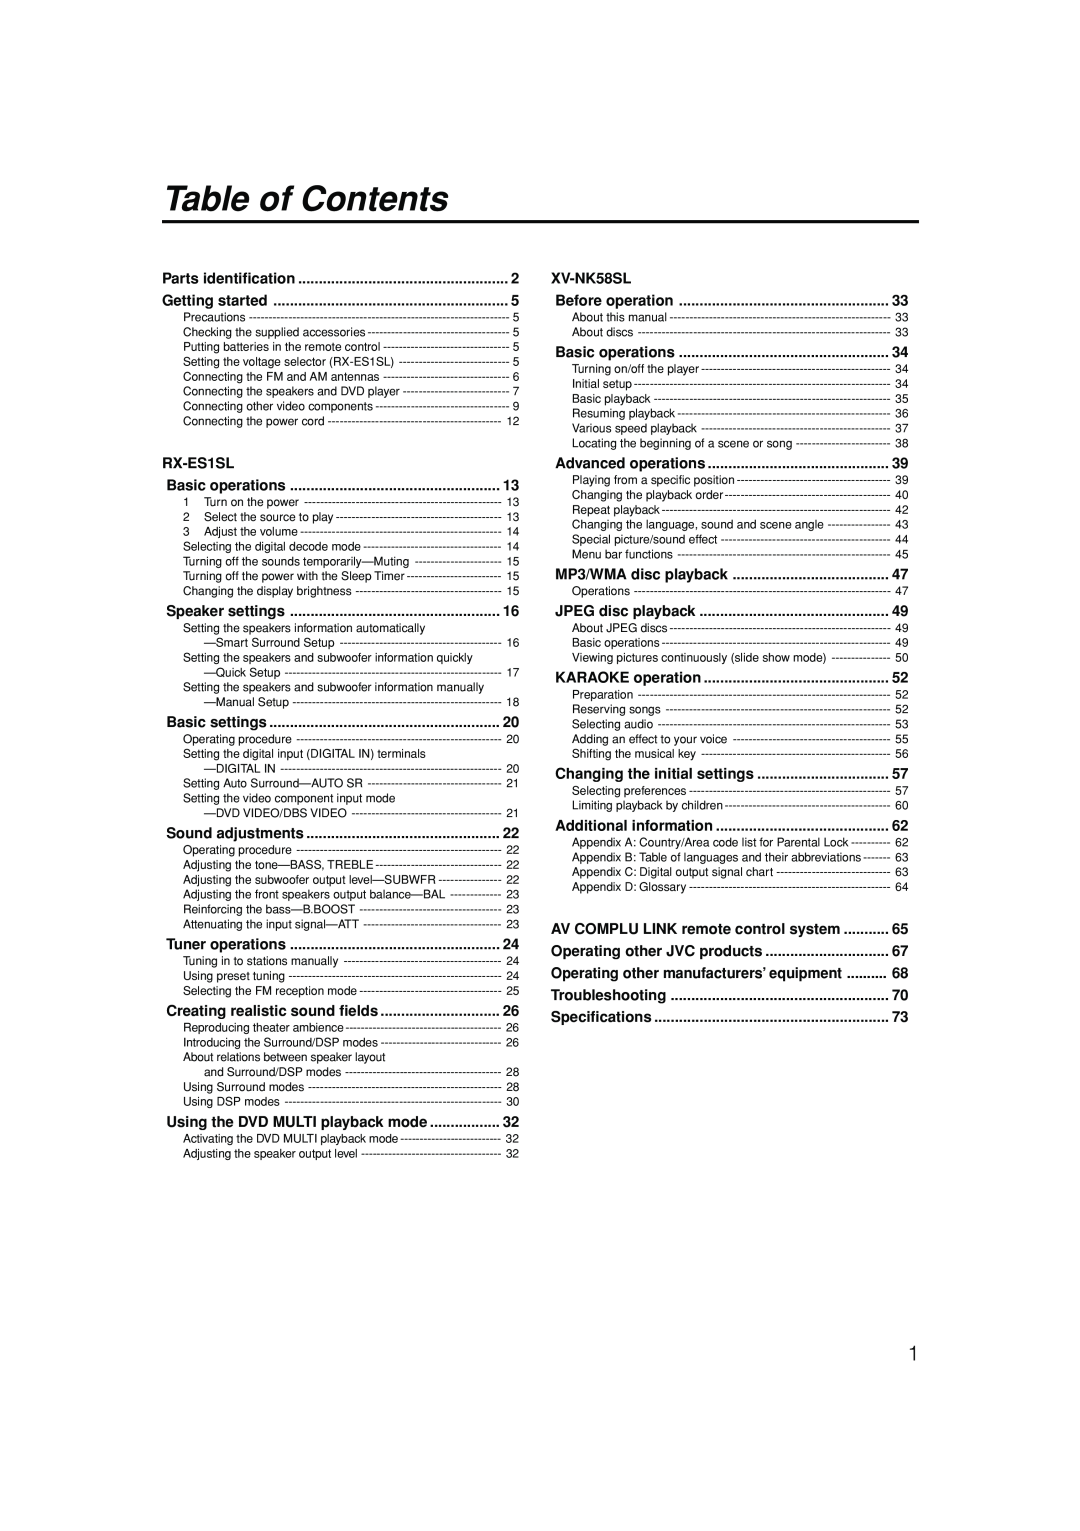 JVC LVT1002-012B manual Table of Contents, RX-ES1SL, XV-NK58SL, AV COMPLU LINK remote control system 